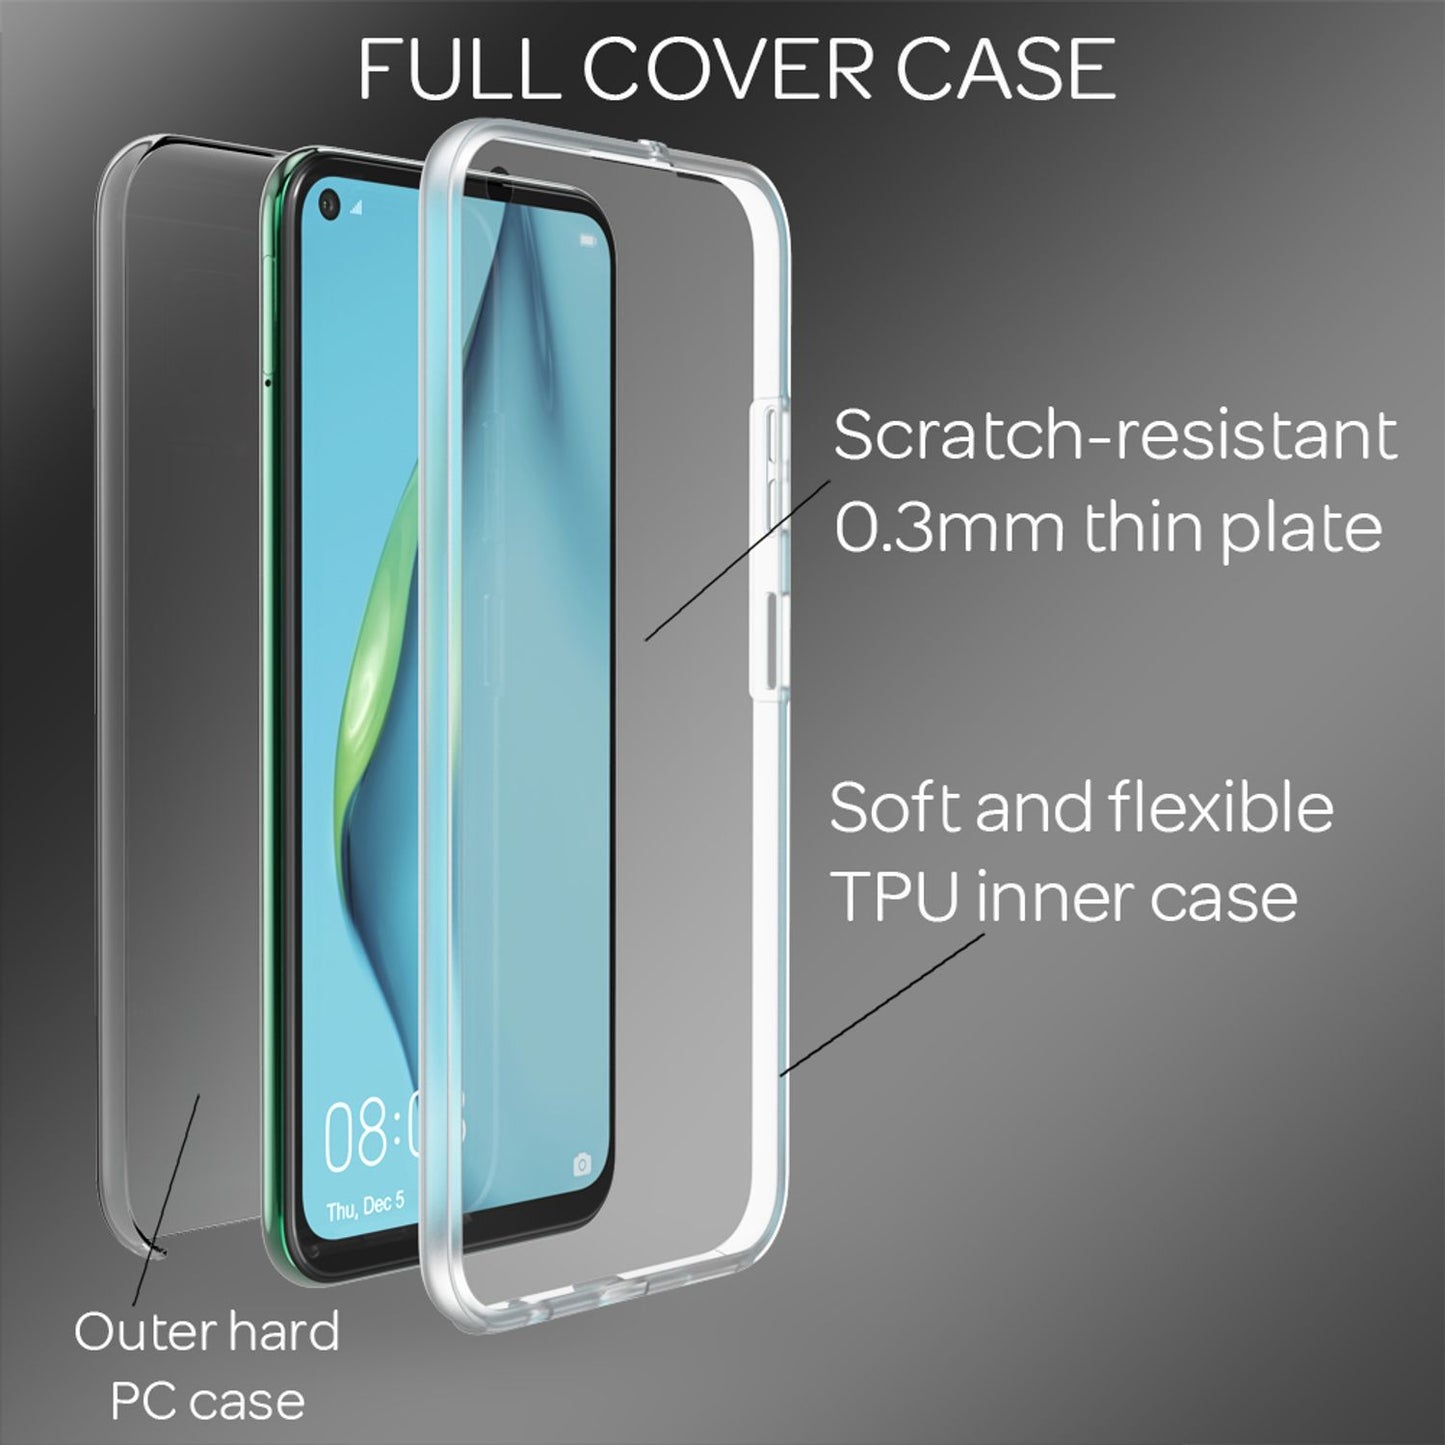 NALIA 360° Handy Hülle für Huawei P40 Lite, Full Cover Case Schutz Tasche Bumper